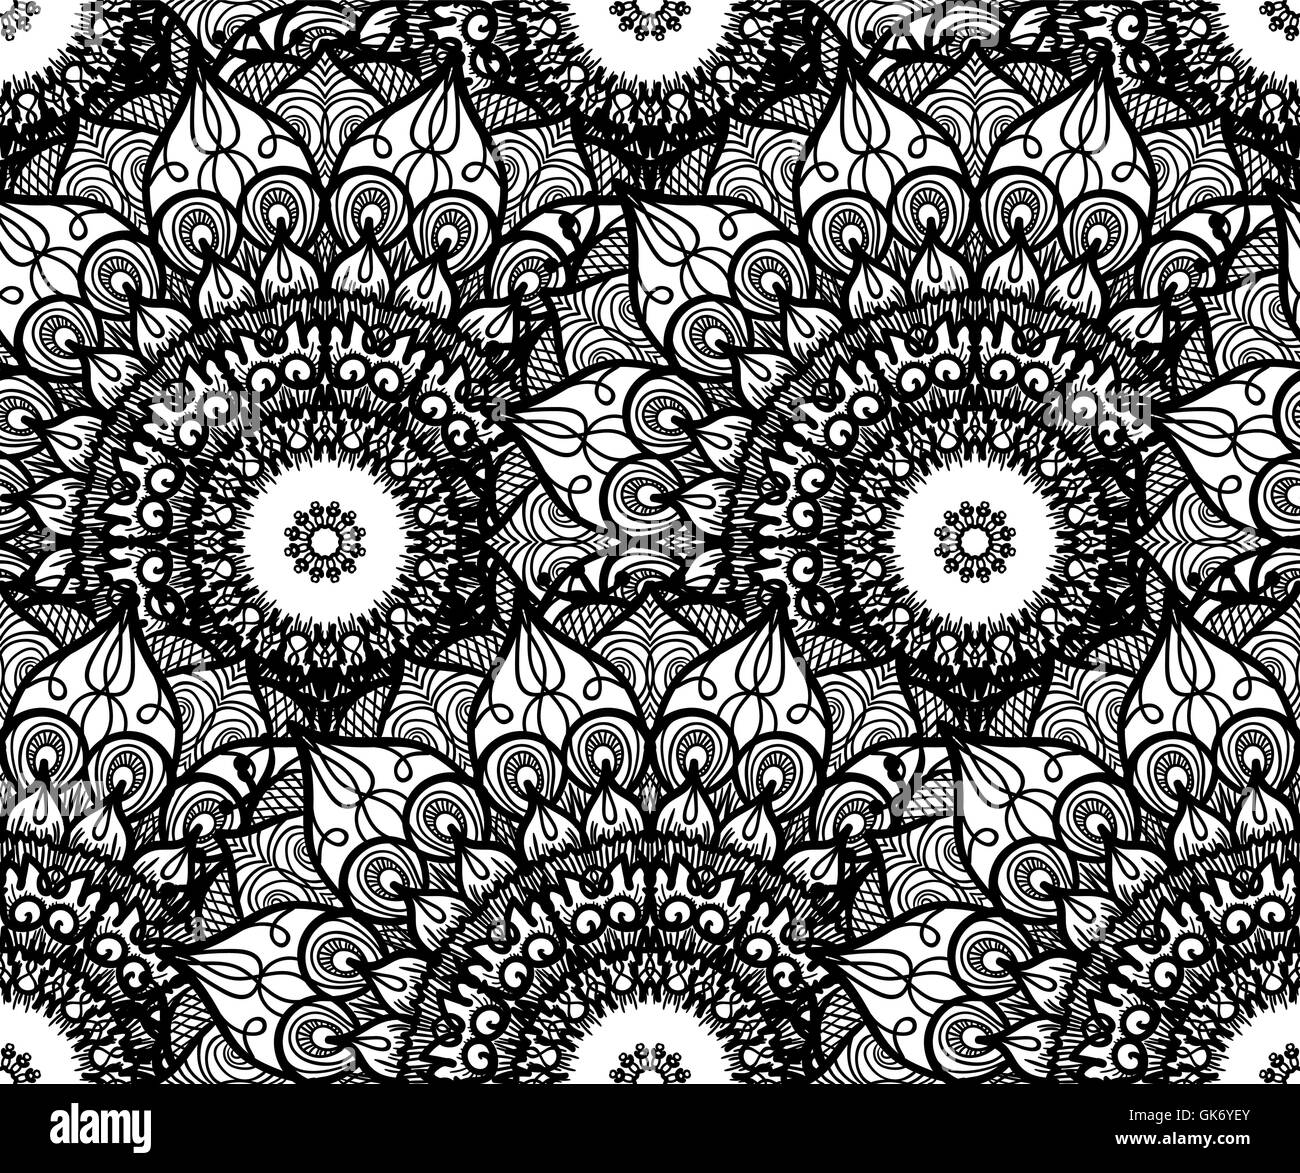 Featured image of post Mandala Patterns Black And White : Immagini, foto stock e grafica vettoriale simili a tema mandala.